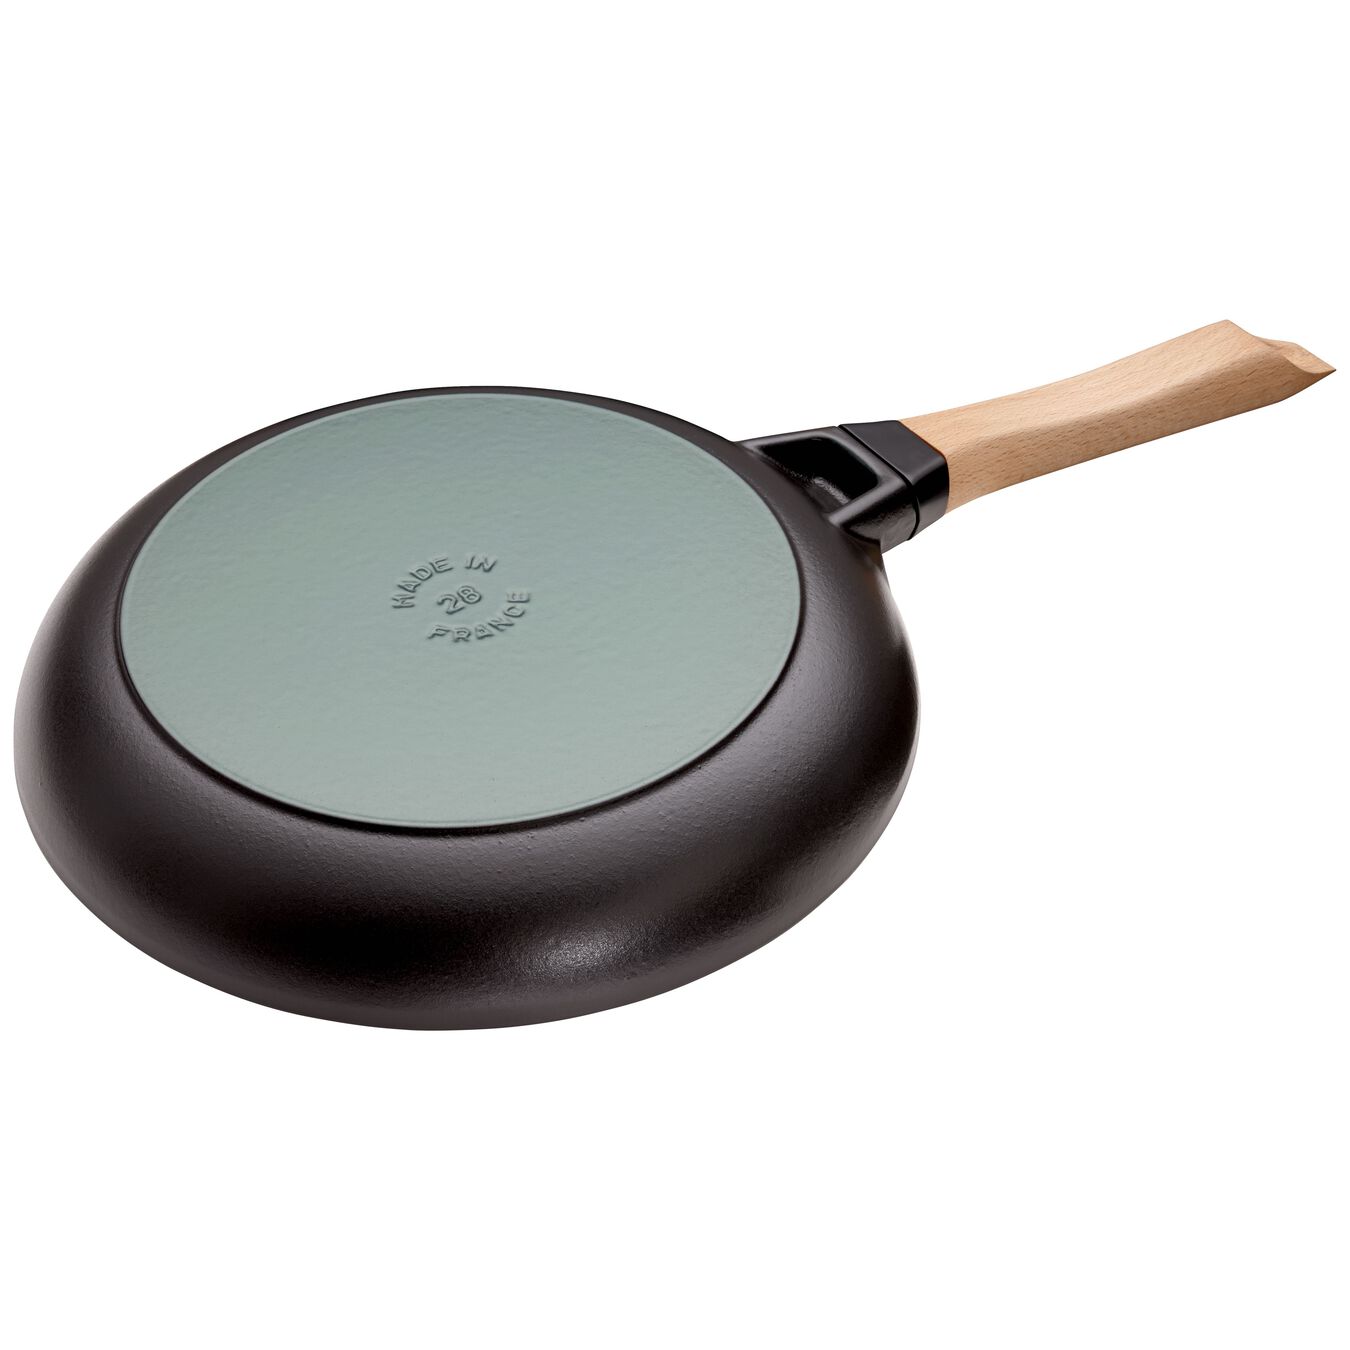 28 cm / 11 inch cast iron Frying pan, black,,large 2